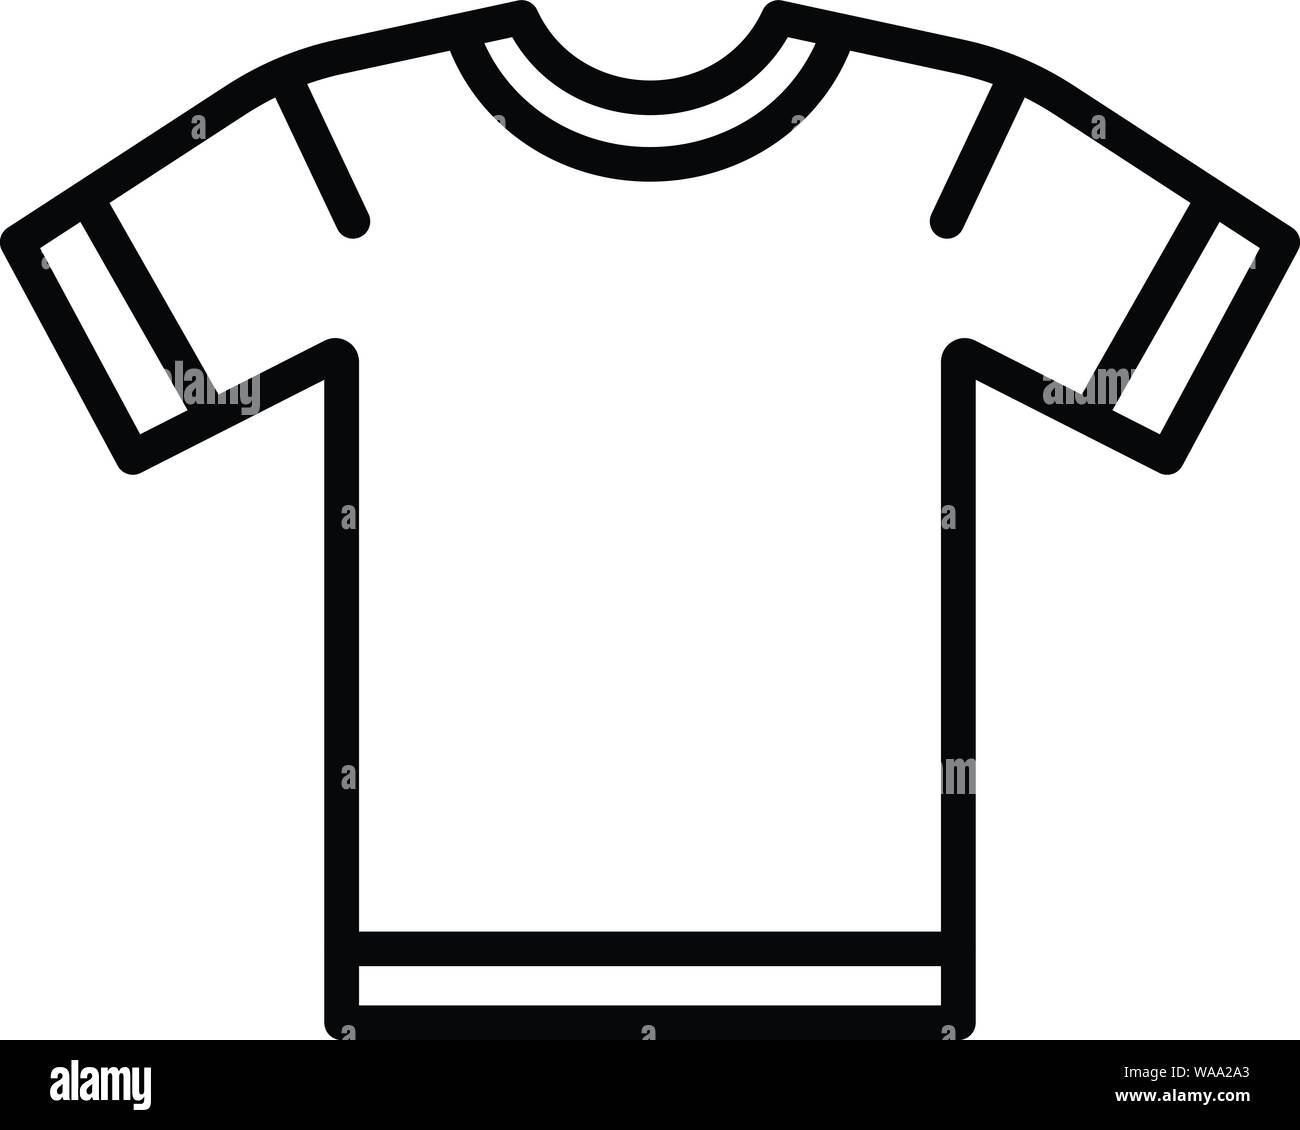 https://c8.alamy.com/comp/WAA2A3/soccer-brazil-shirt-icon-outline-style-WAA2A3.jpg